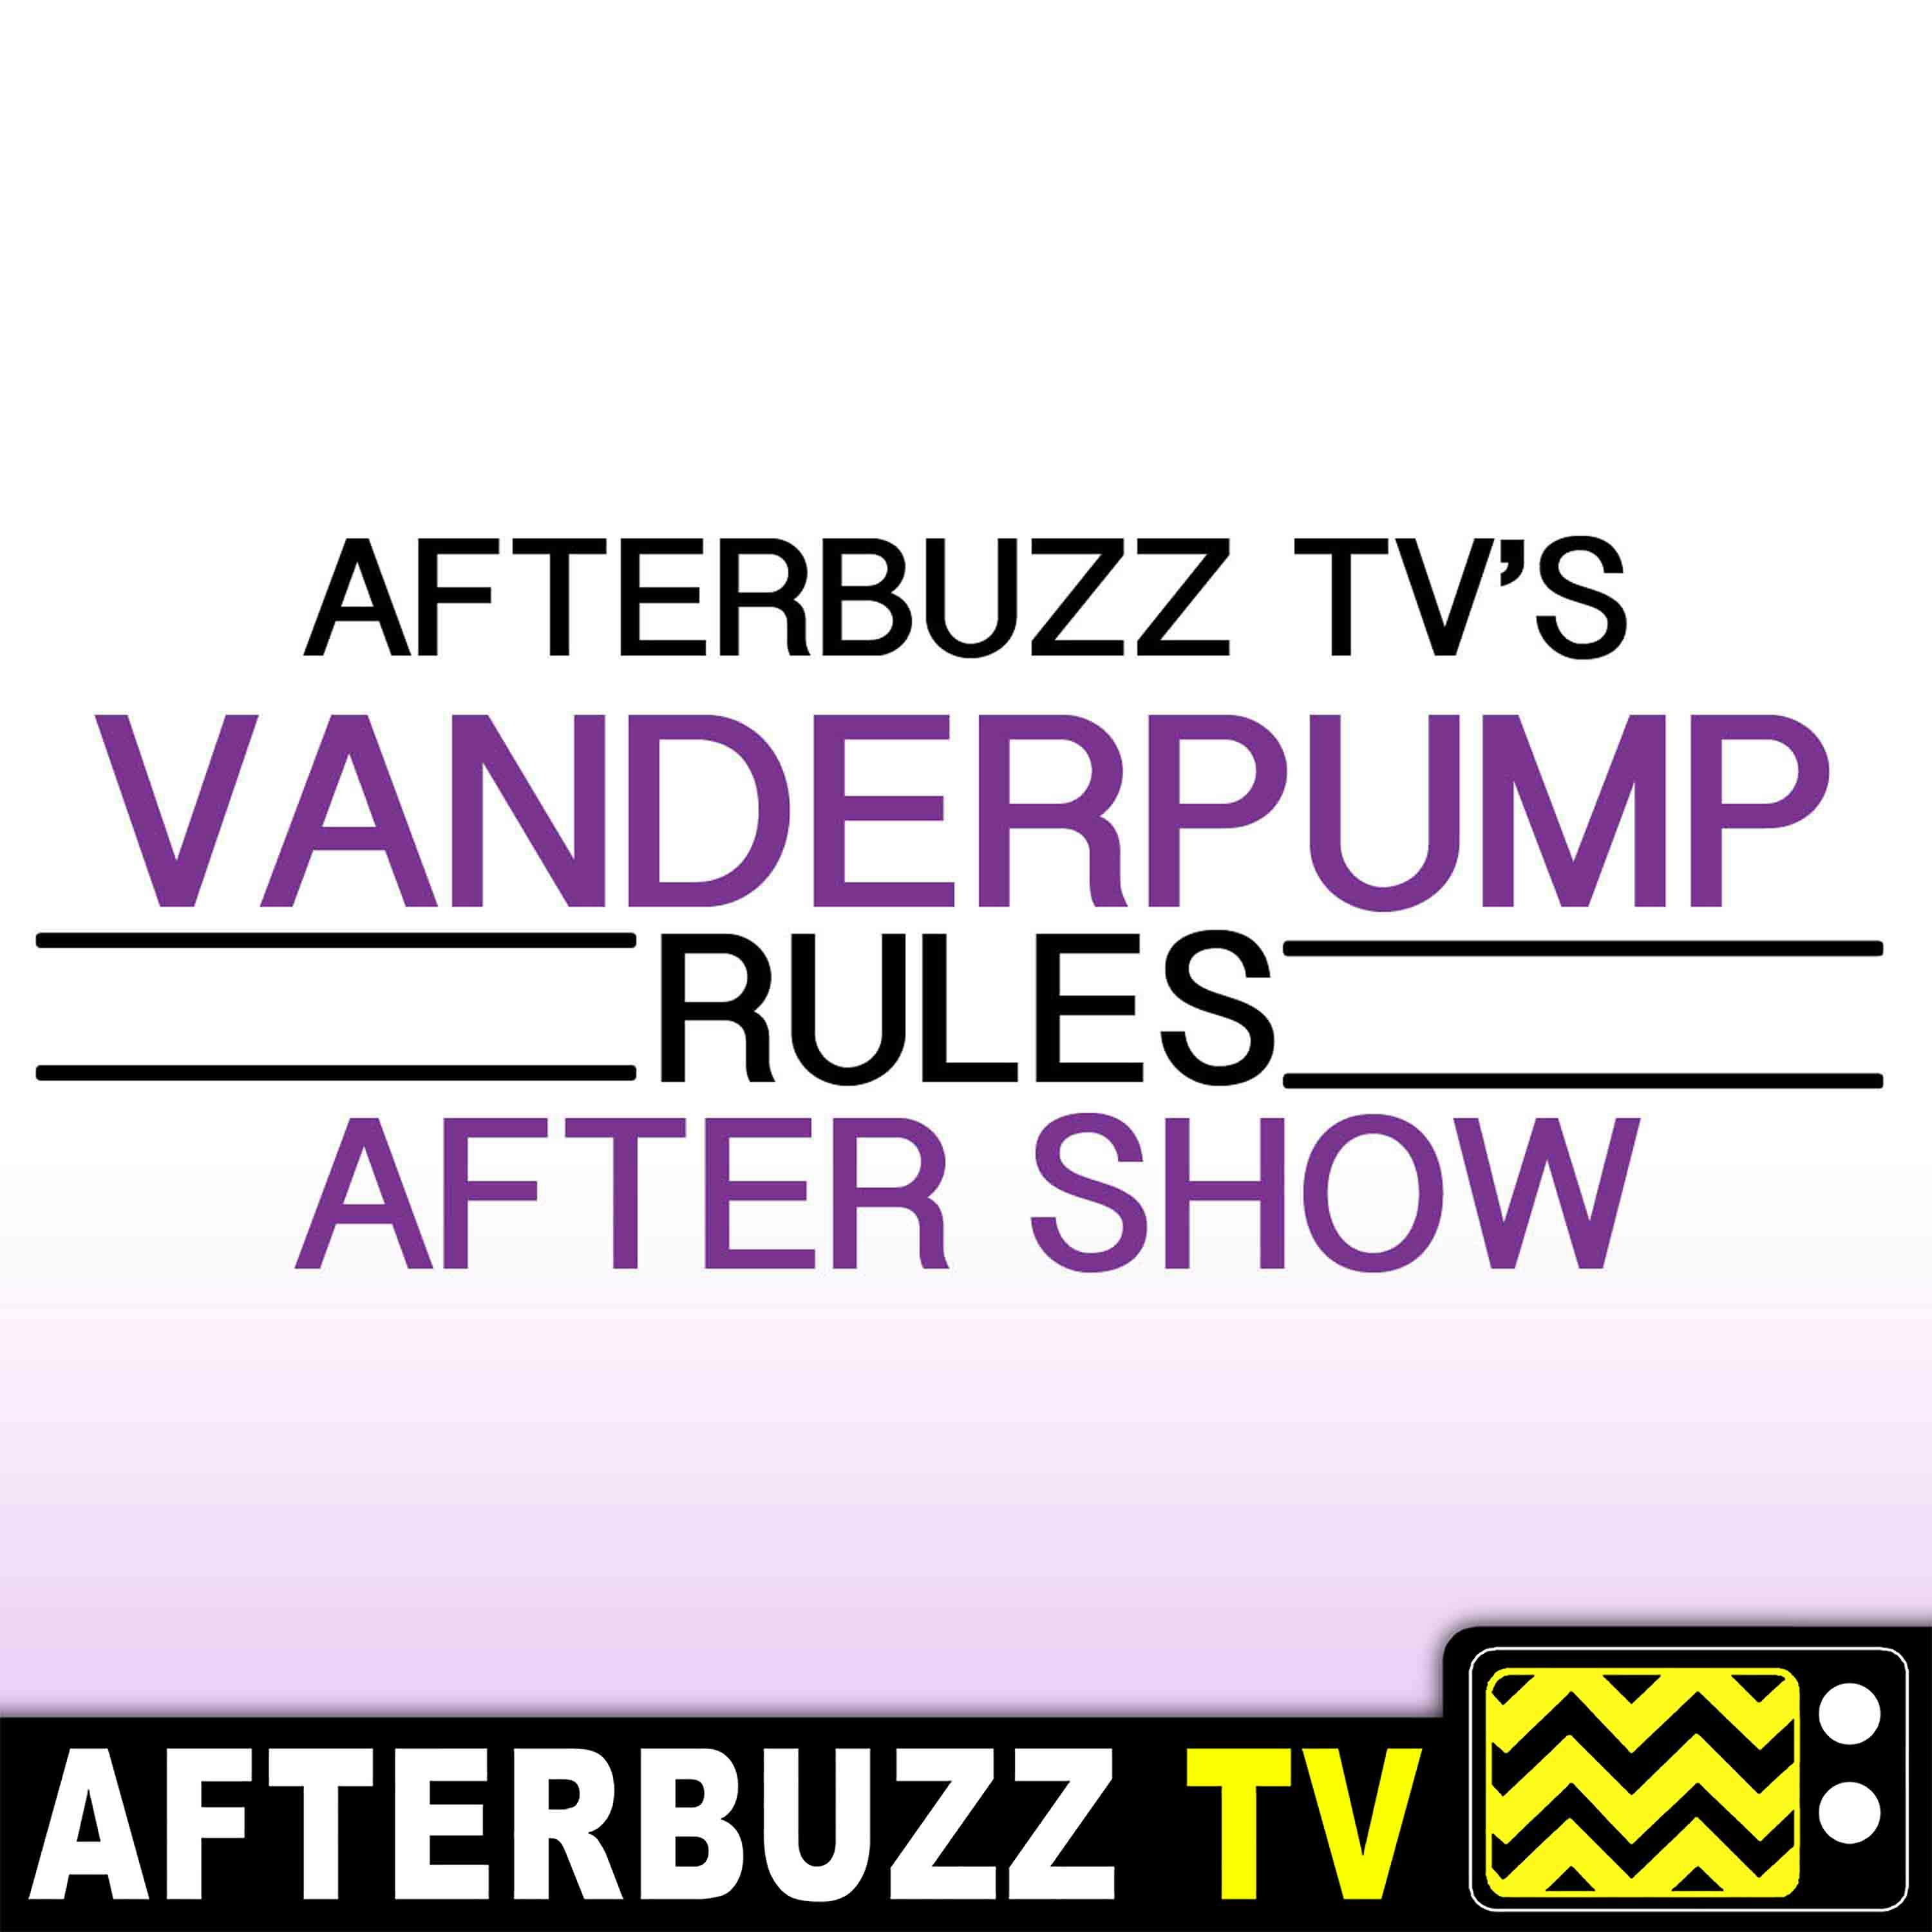 "End of an Era" Season 7 Episode 18 'Vanderpump Rules' Review